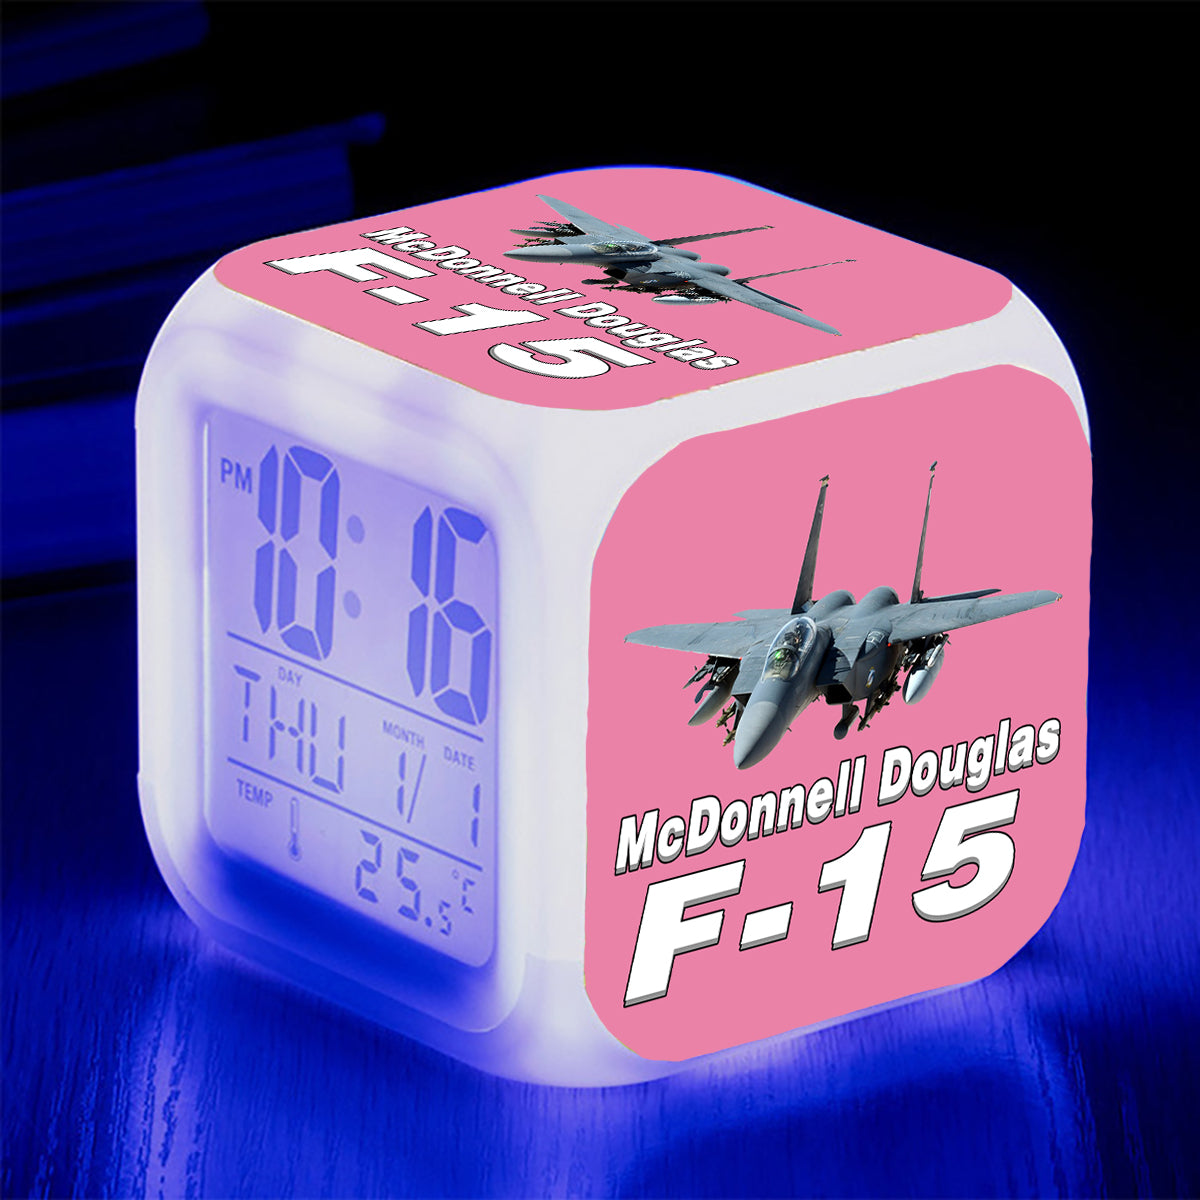 The McDonnell Douglas F15 Designed "7 Colour" Digital Alarm Clock